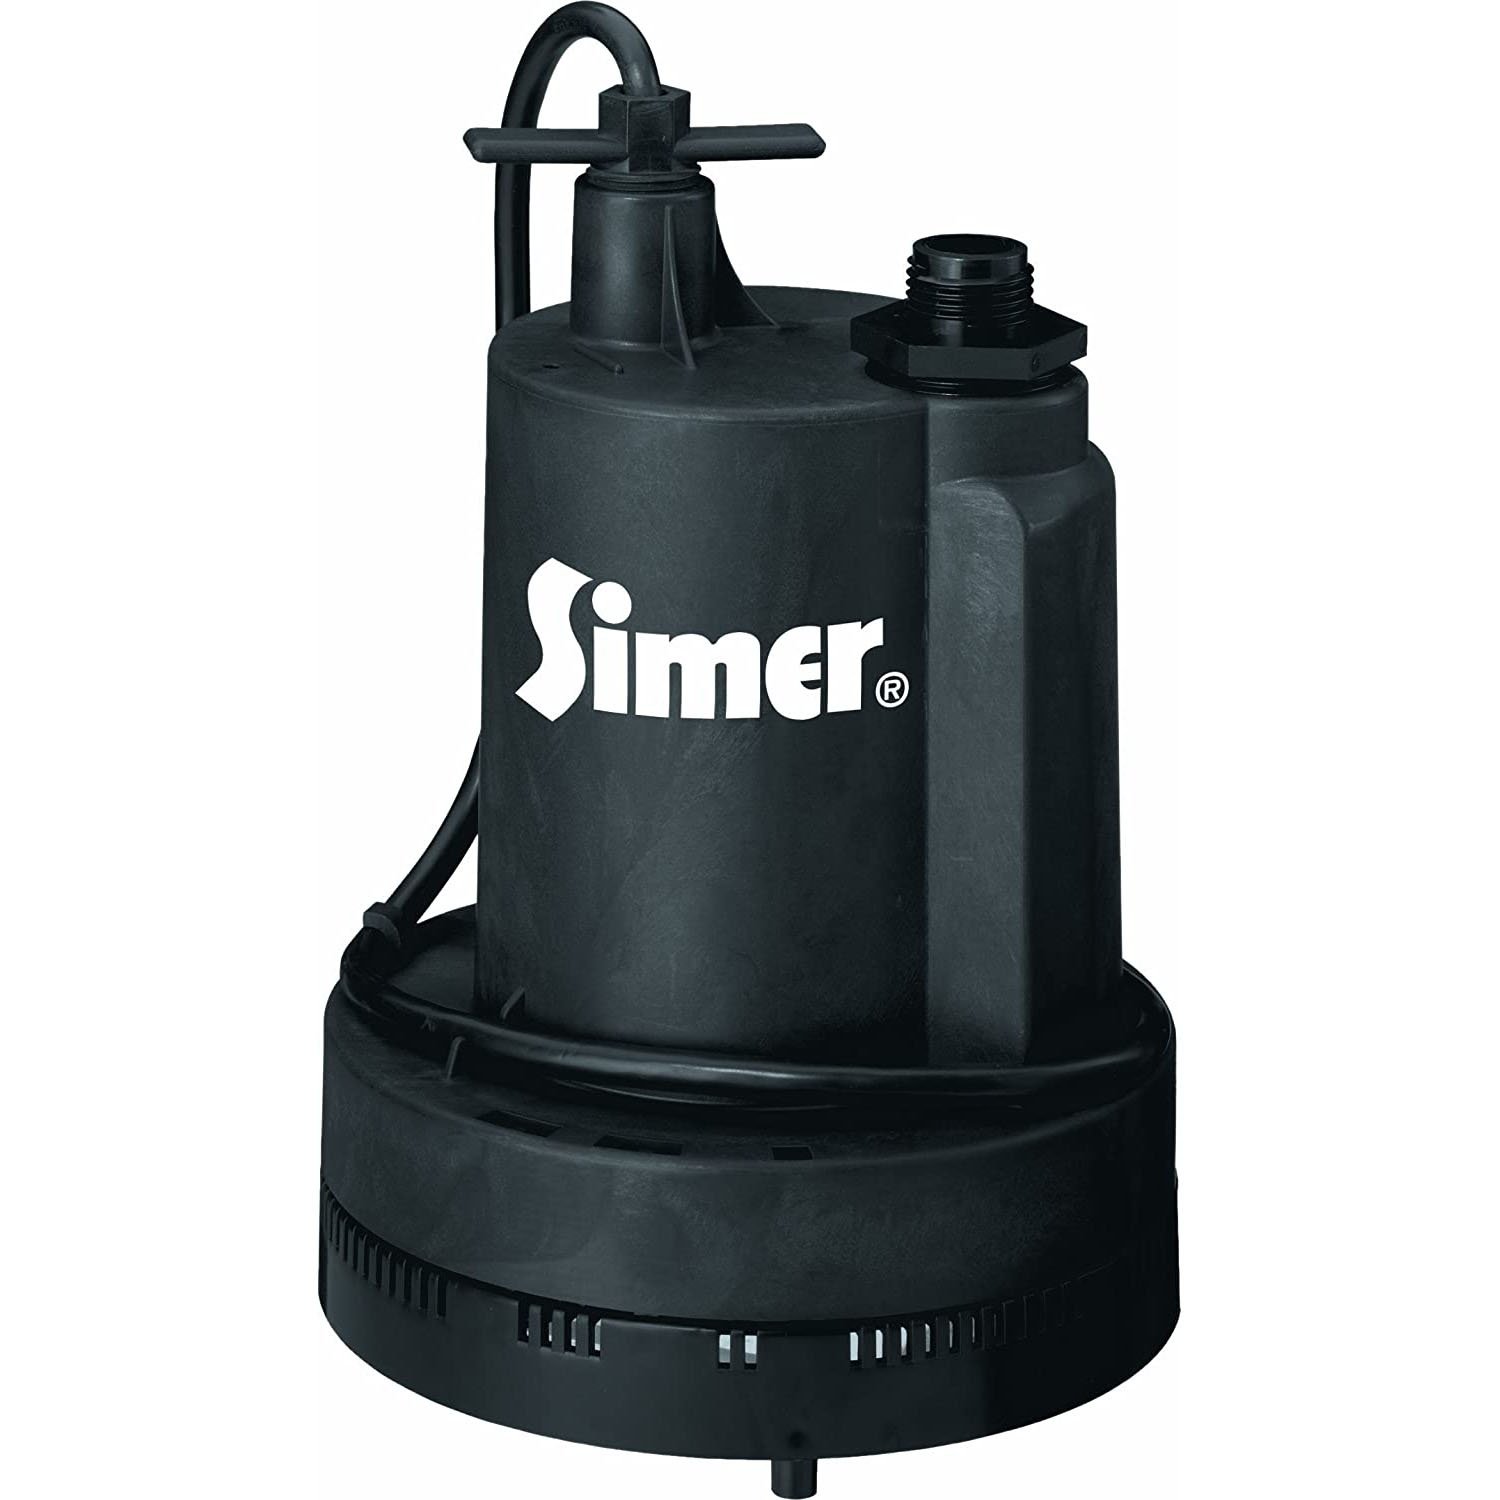 Simer Submersible Pump